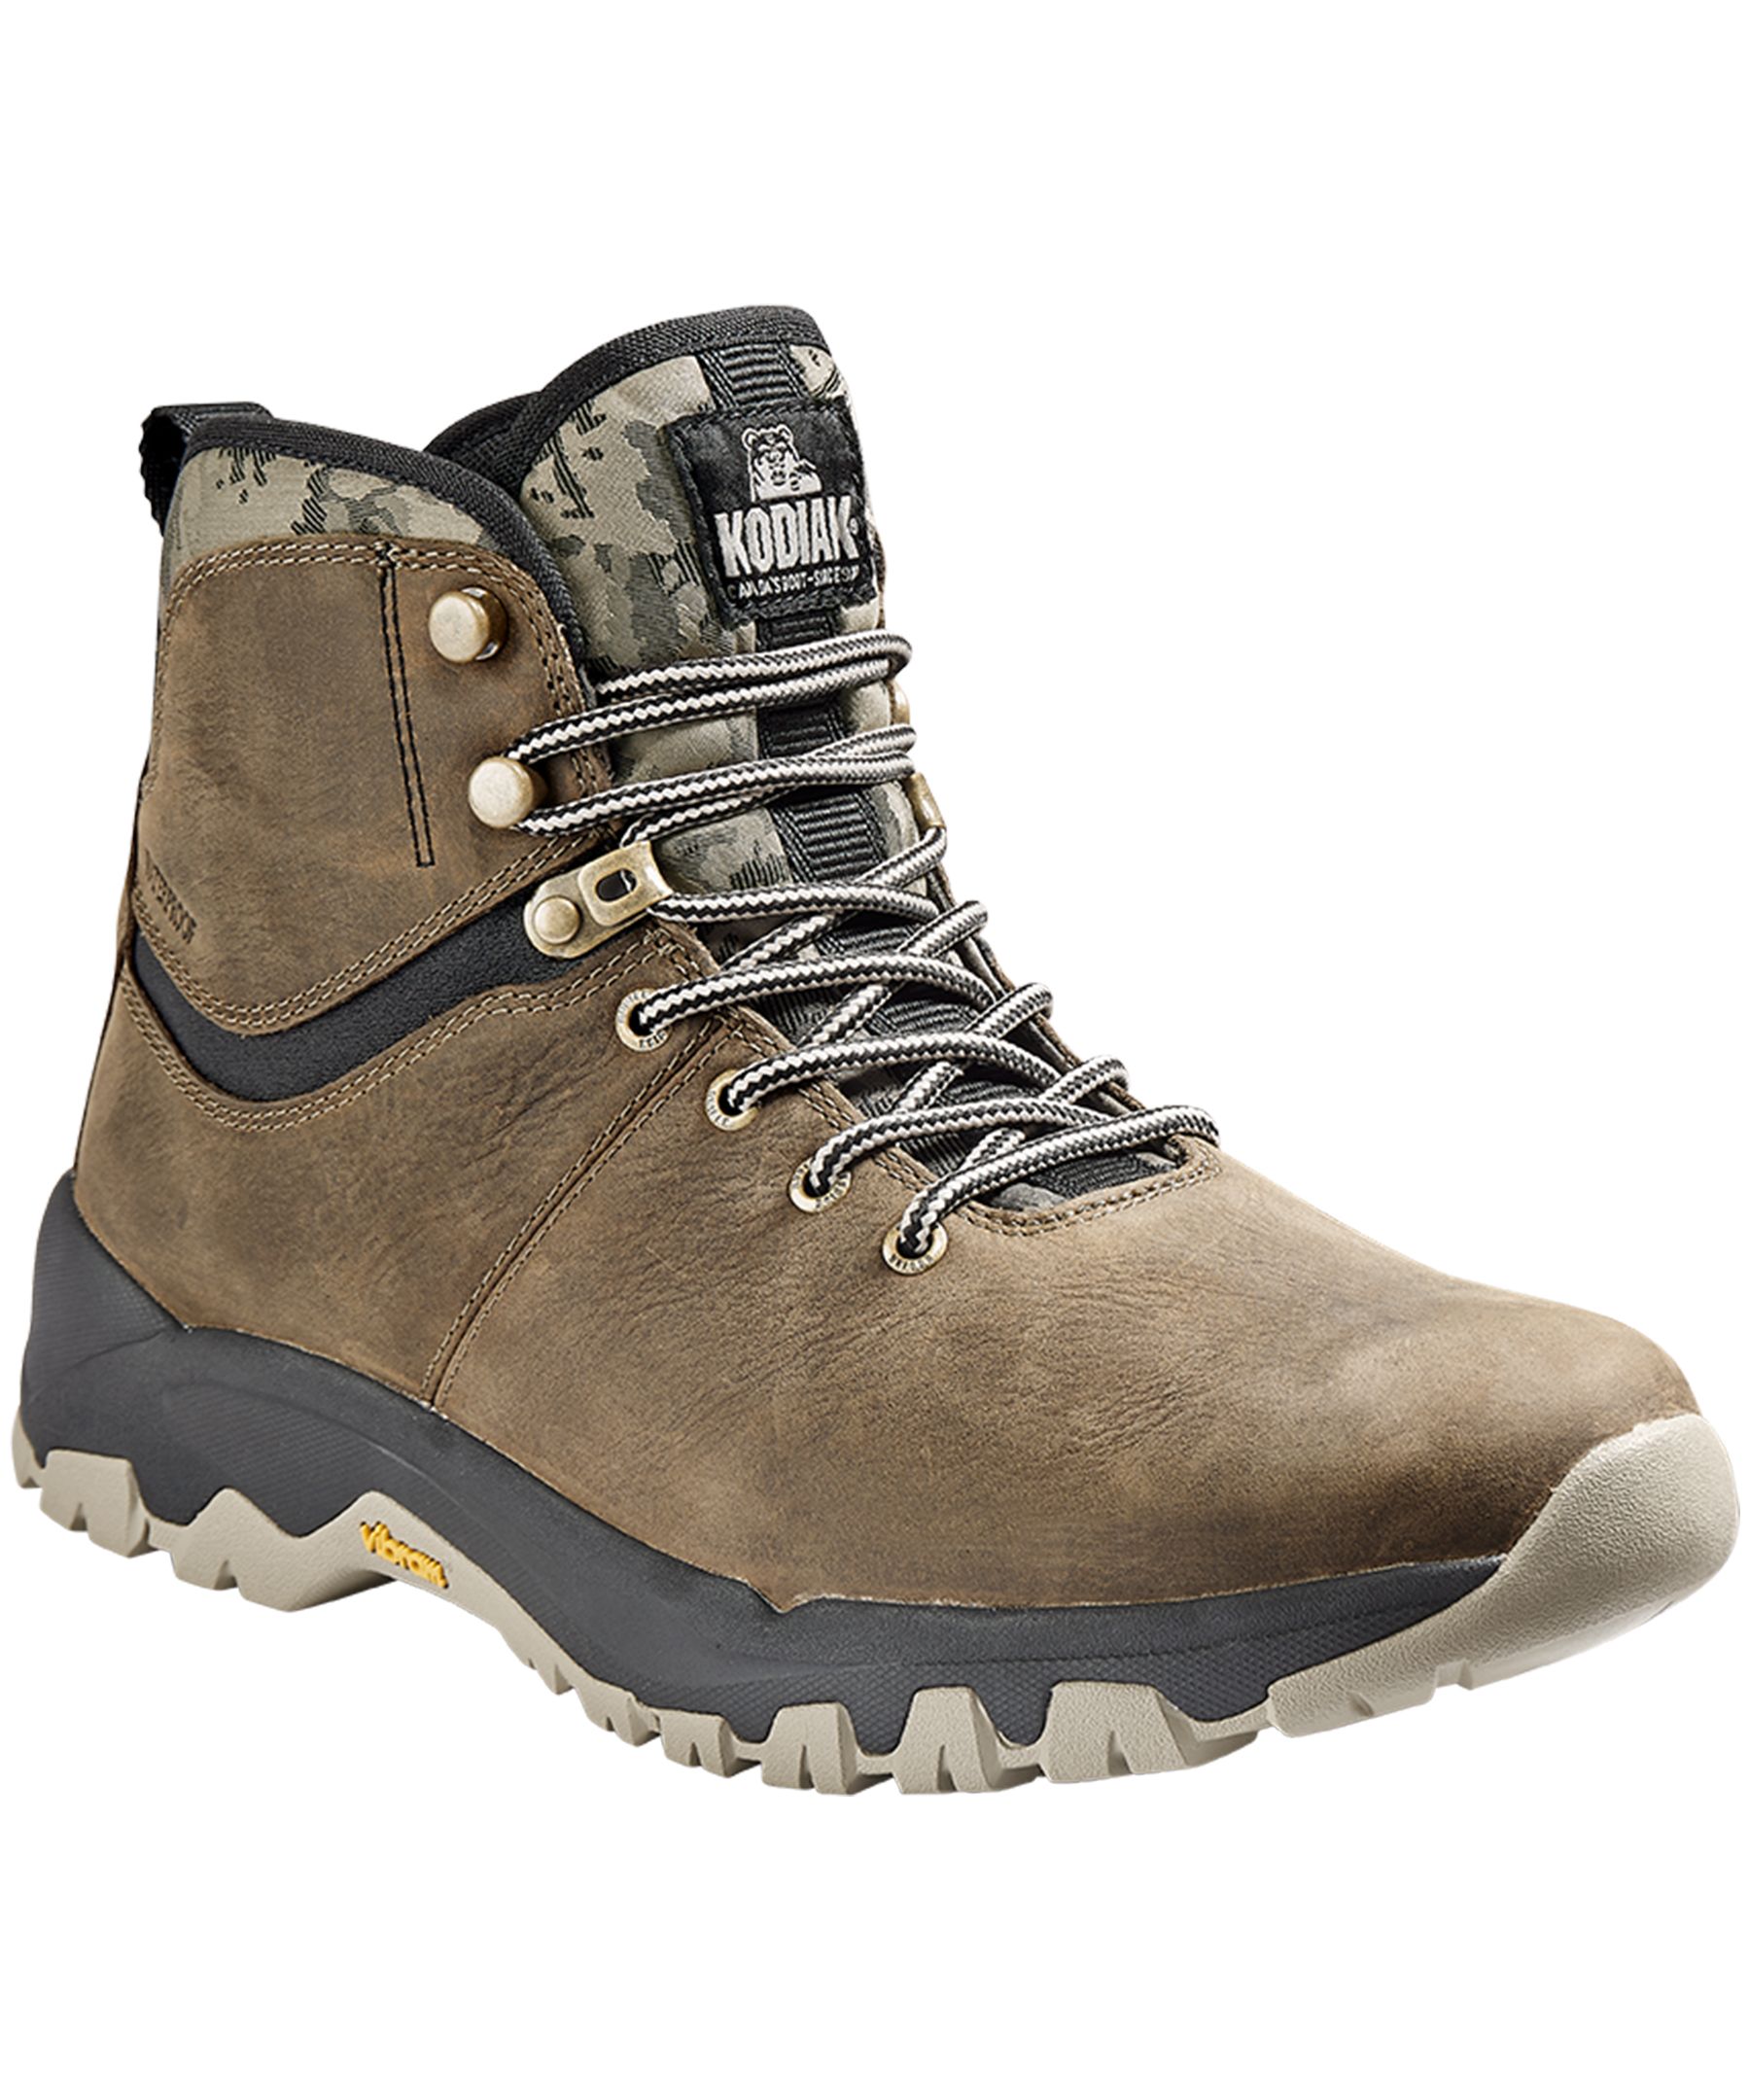 Kodiak Men's Comox Waterproof Leather Boots | Marks